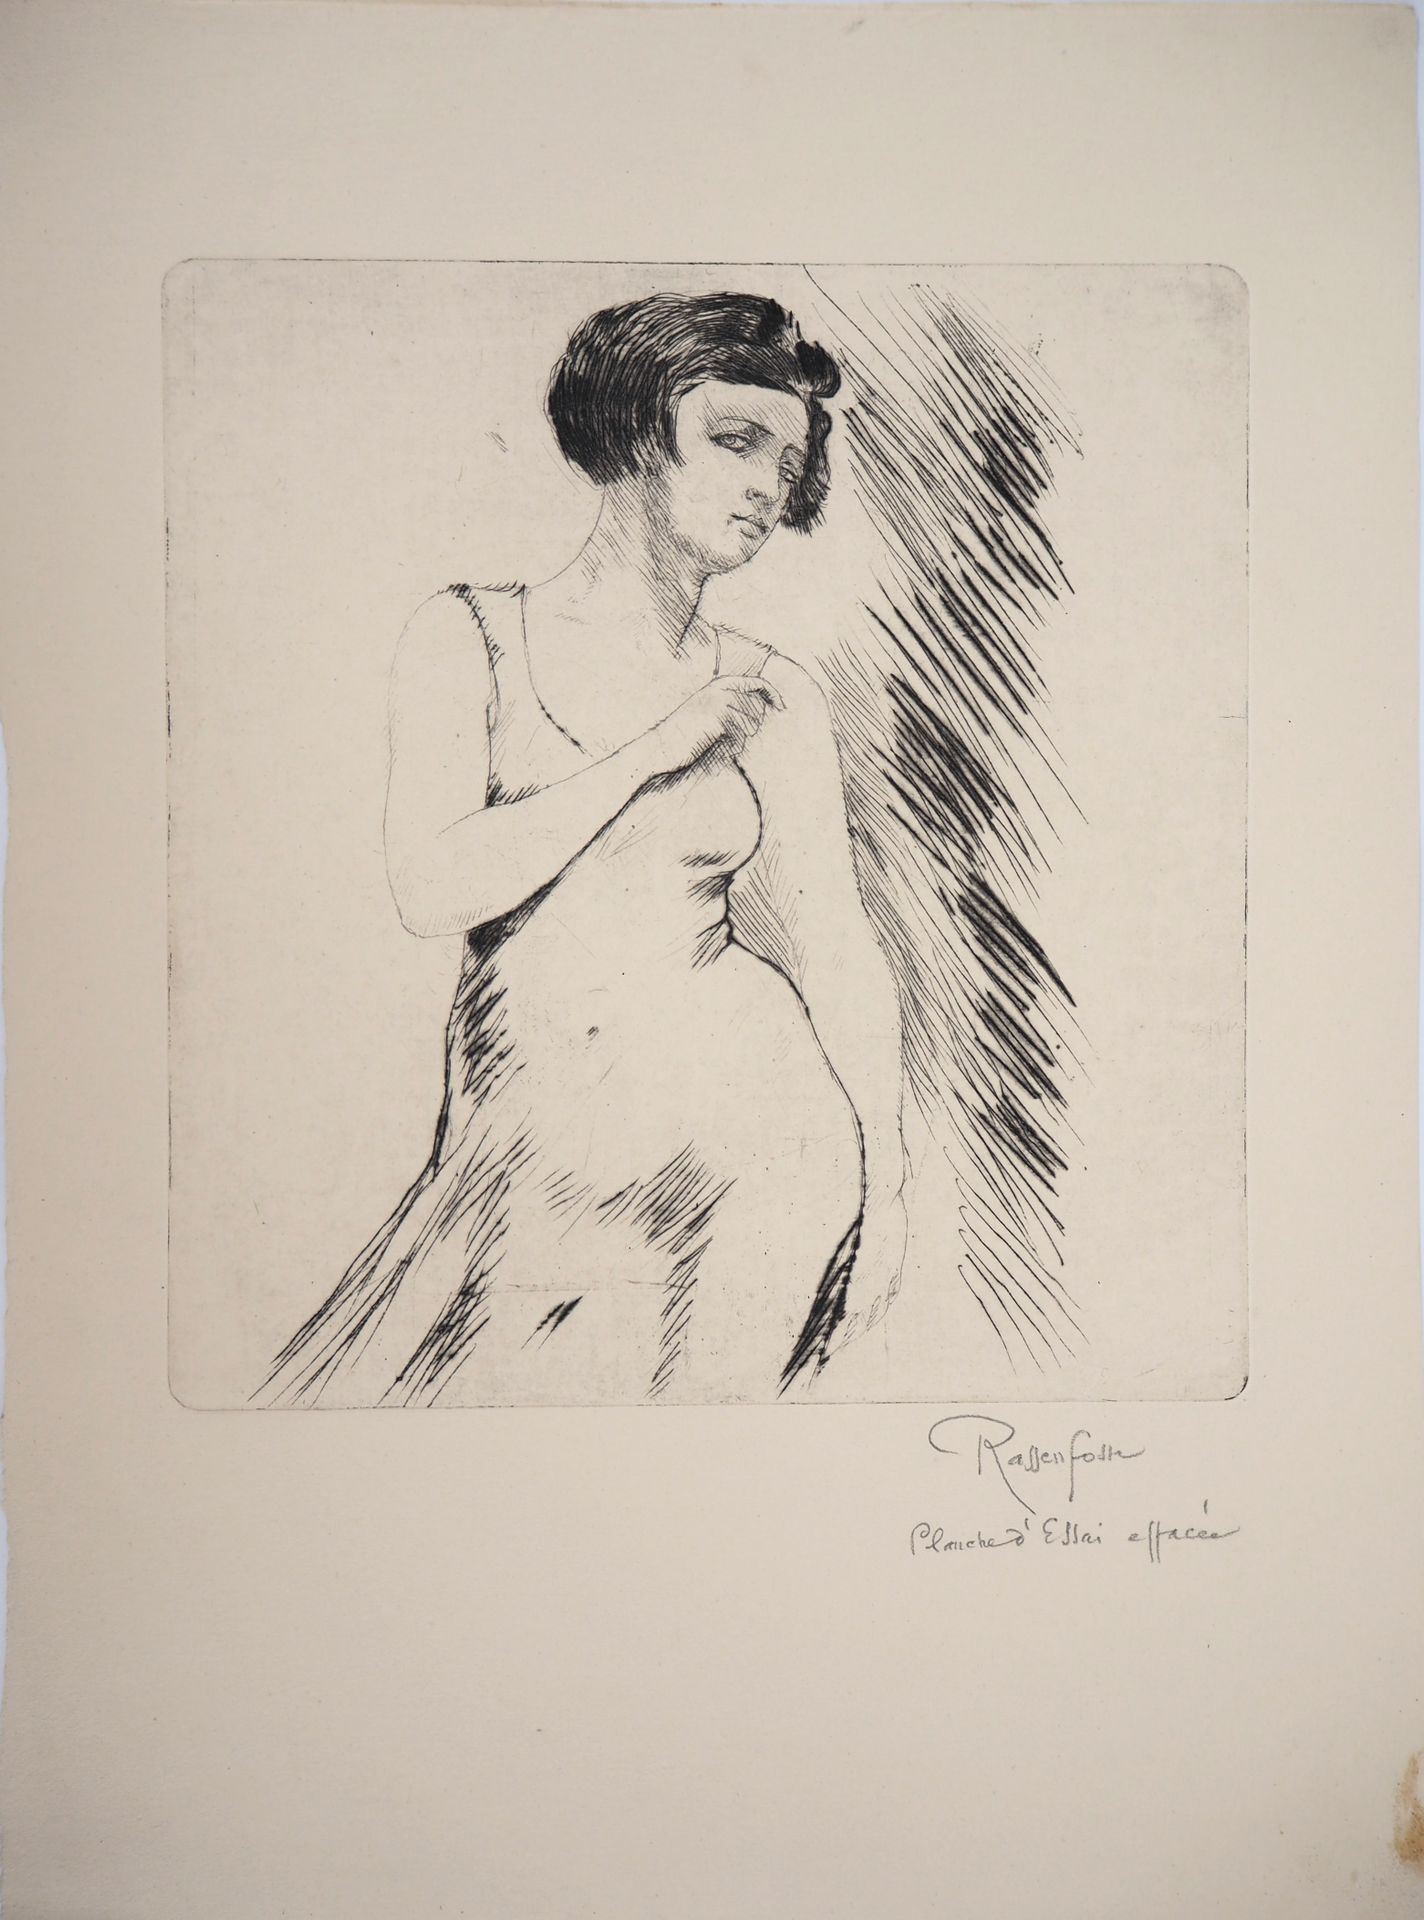 Armand RASSENFOSSE 阿曼德-拉森福斯(1862-1934)

穿裙子的女人，1928年

原始干点蚀刻画

用铅笔签名

日期为1928年

&hellip;